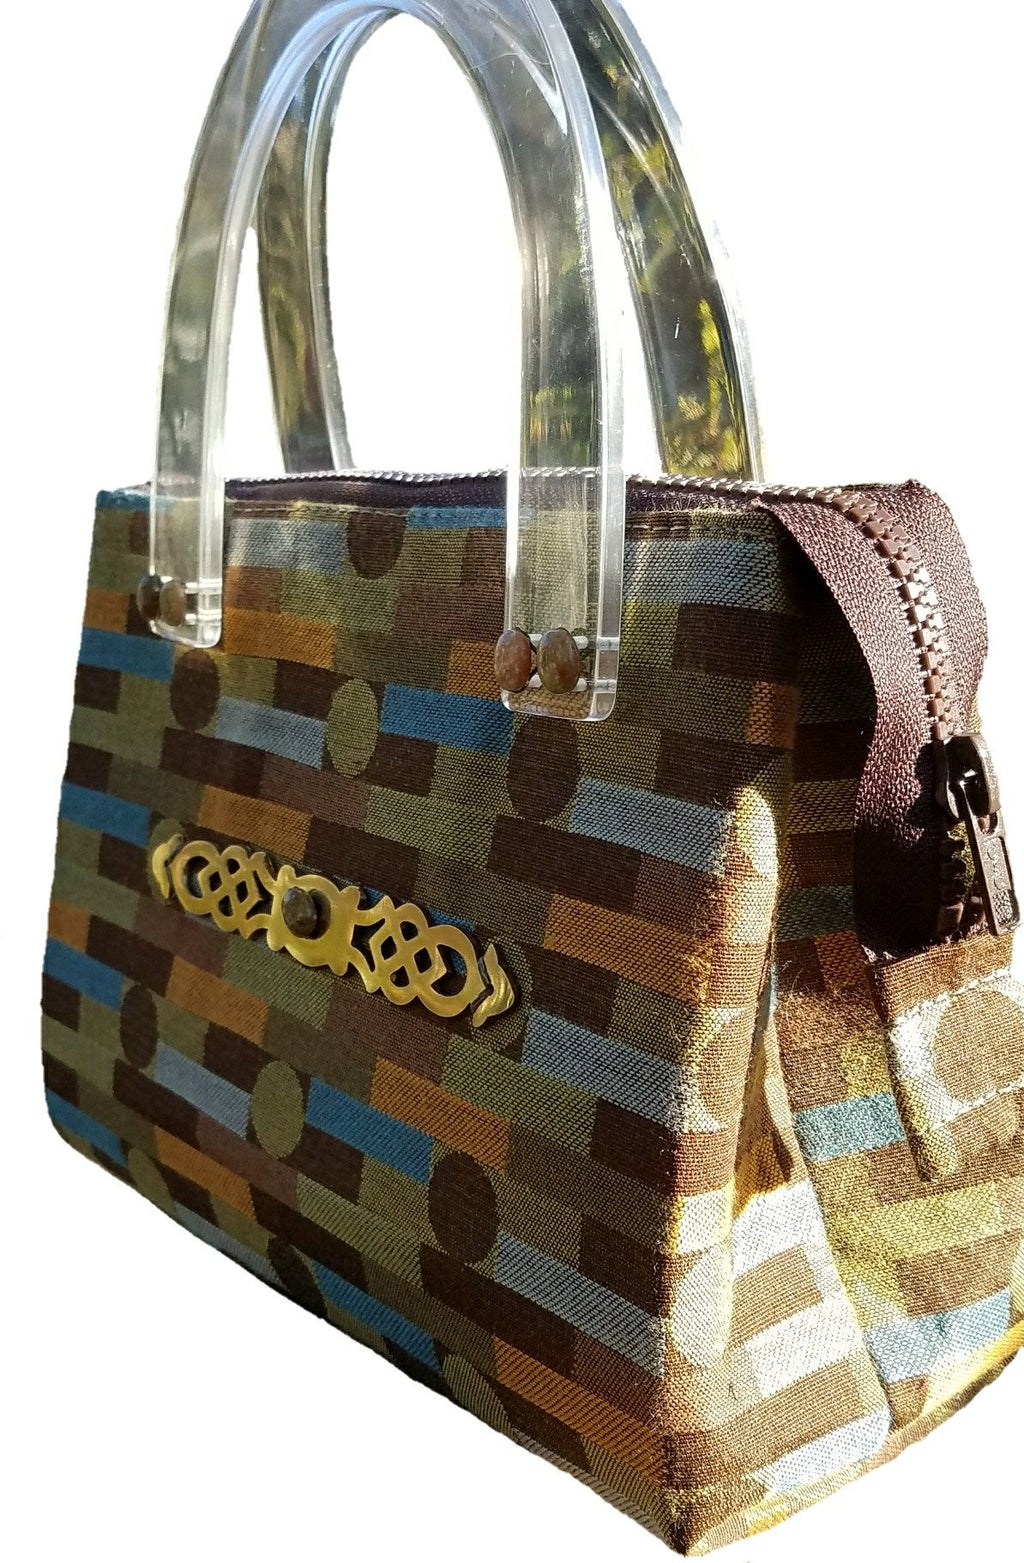 Liz Jordan Designs - Handcrafted - Little handbag - Custom made - made to order - Stepping Stones Collection #1003